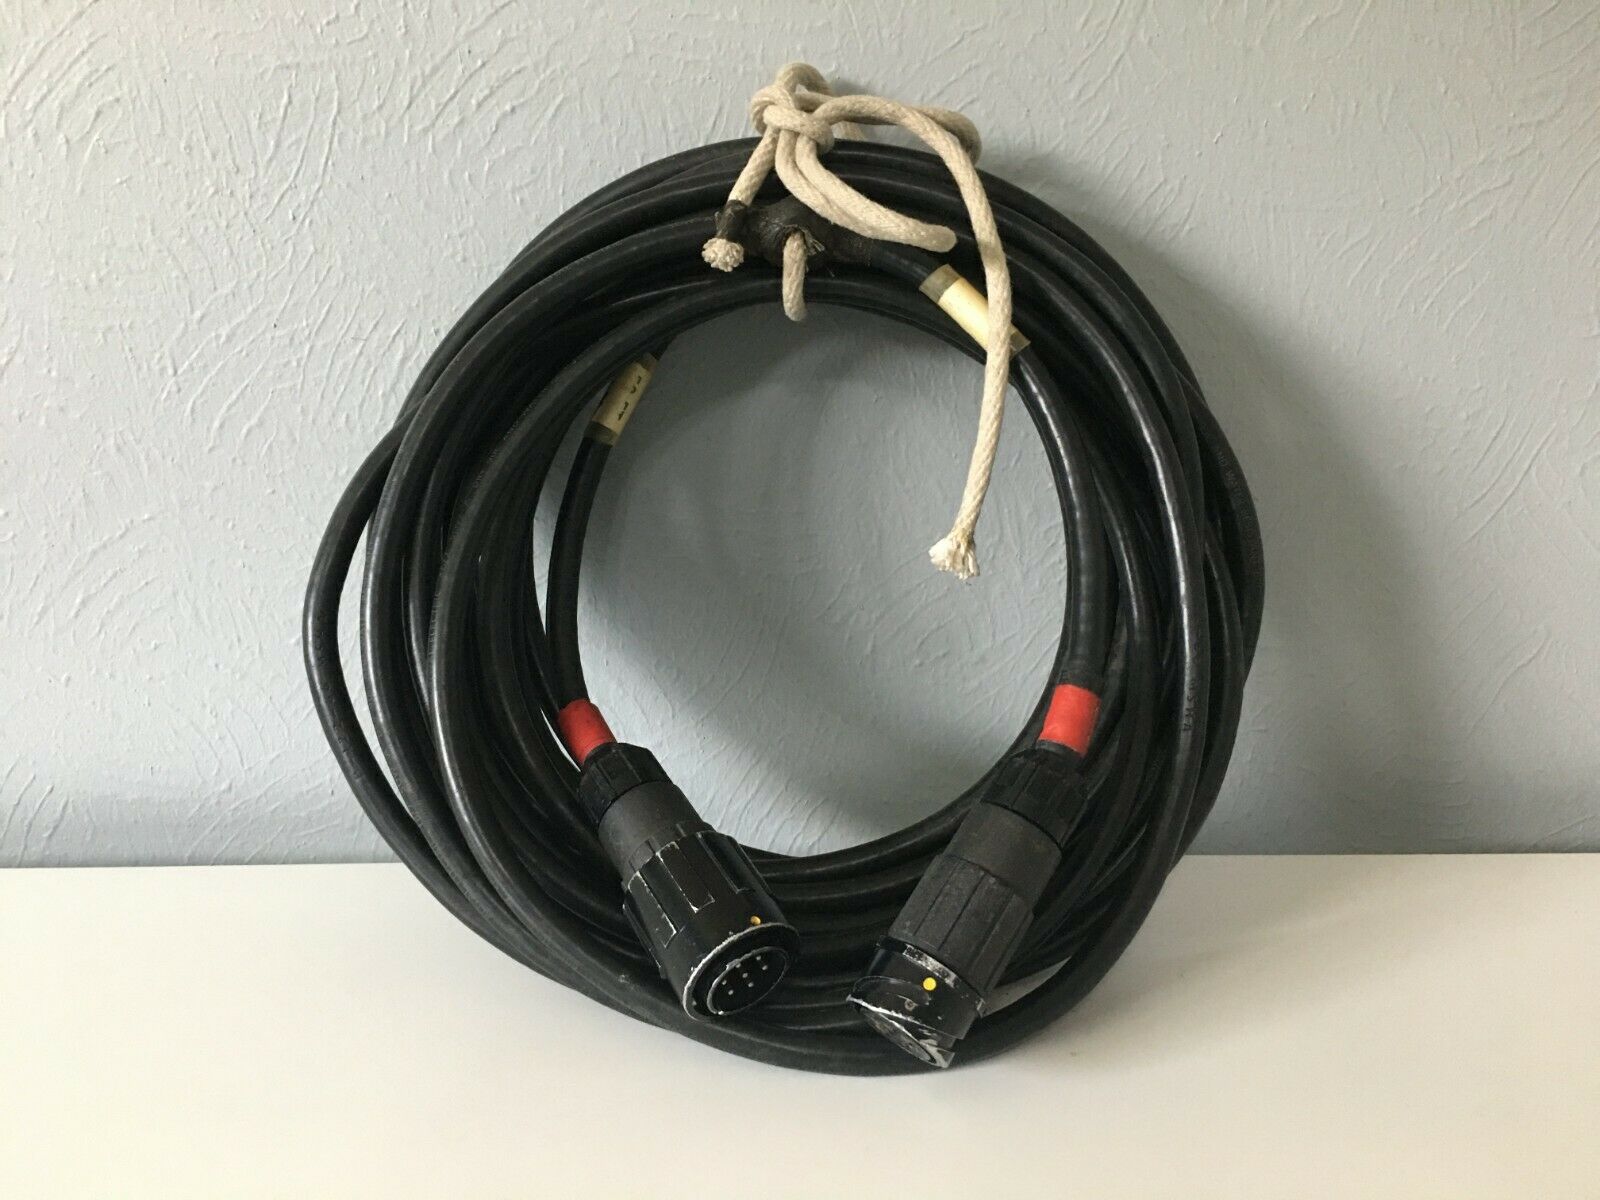 50ft Hmi Head Cable - 1200w/575w - Arri